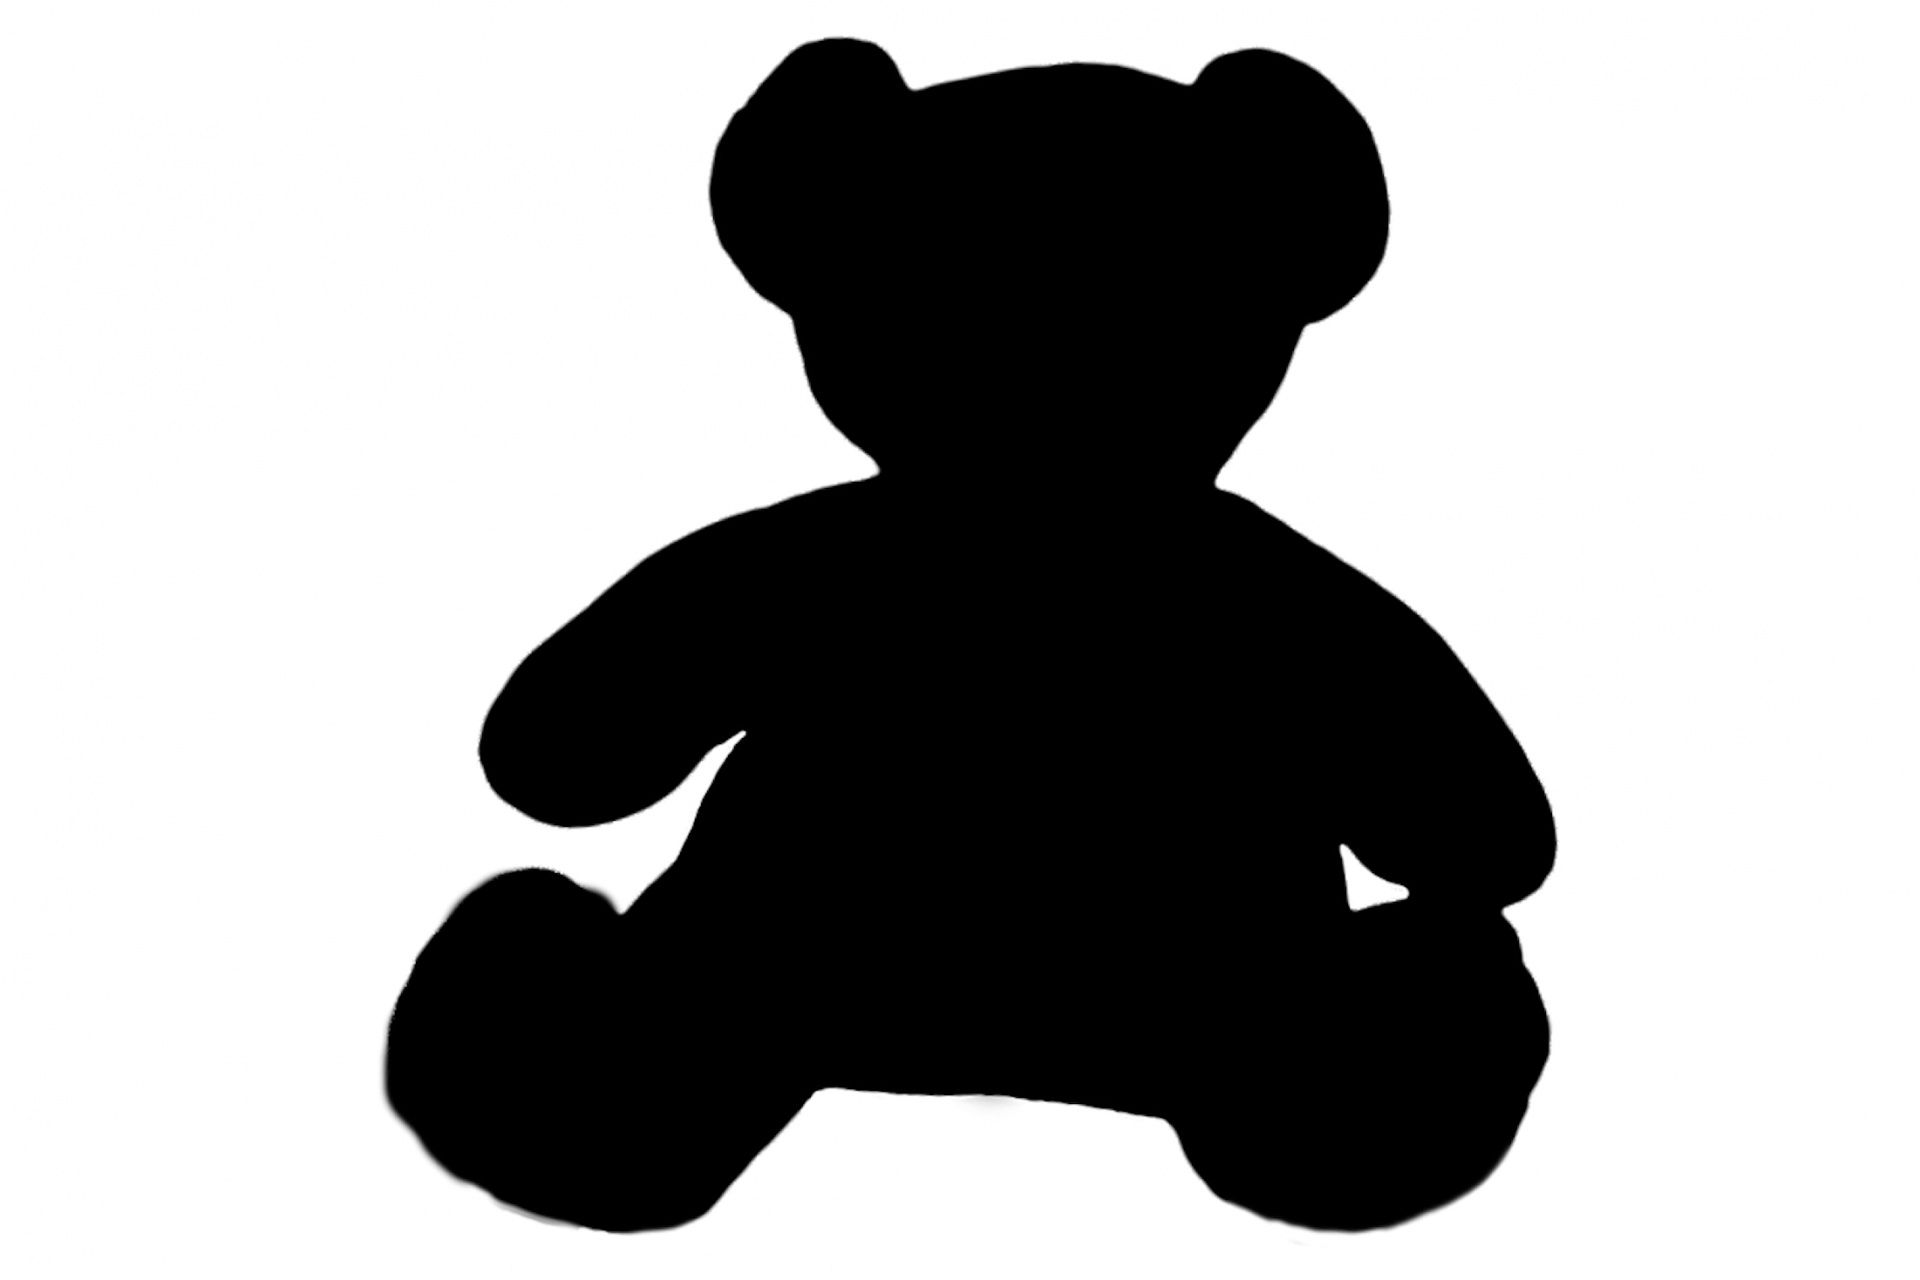 teddy bear silhouette